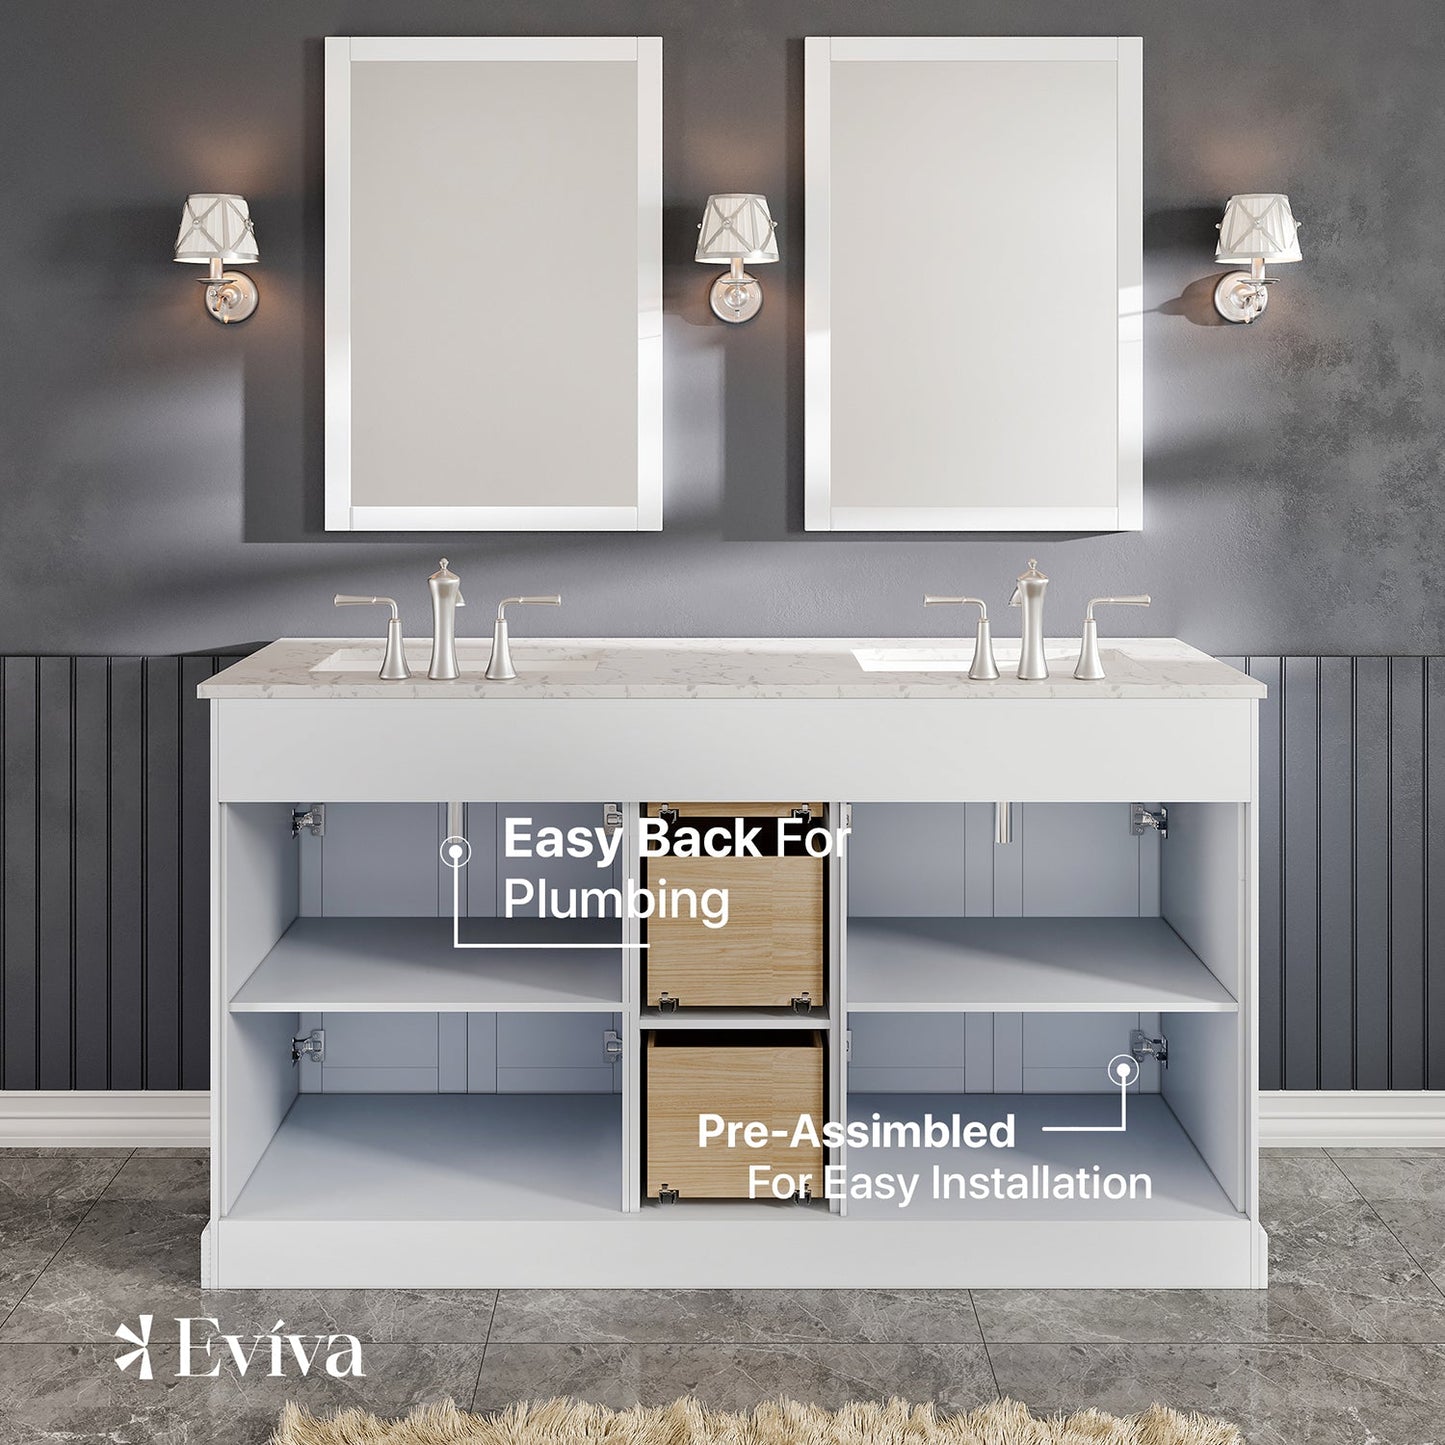 Eviva Epic 60 Inch Transitional Modern White Bathroom Vanity